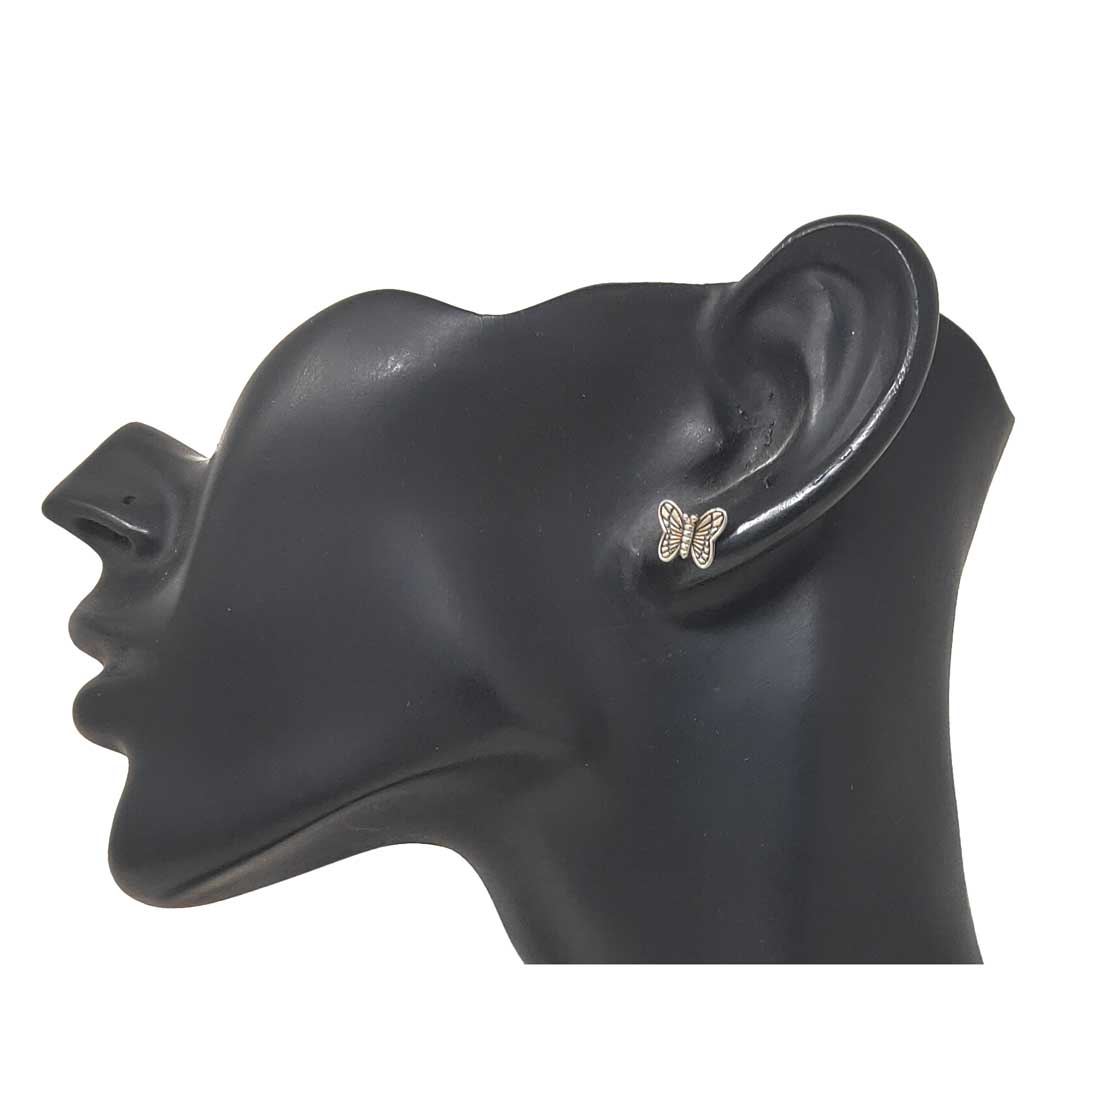 Anokhi Ada Metal Stud Earrings for Girls and Women (Silver)-AG-24